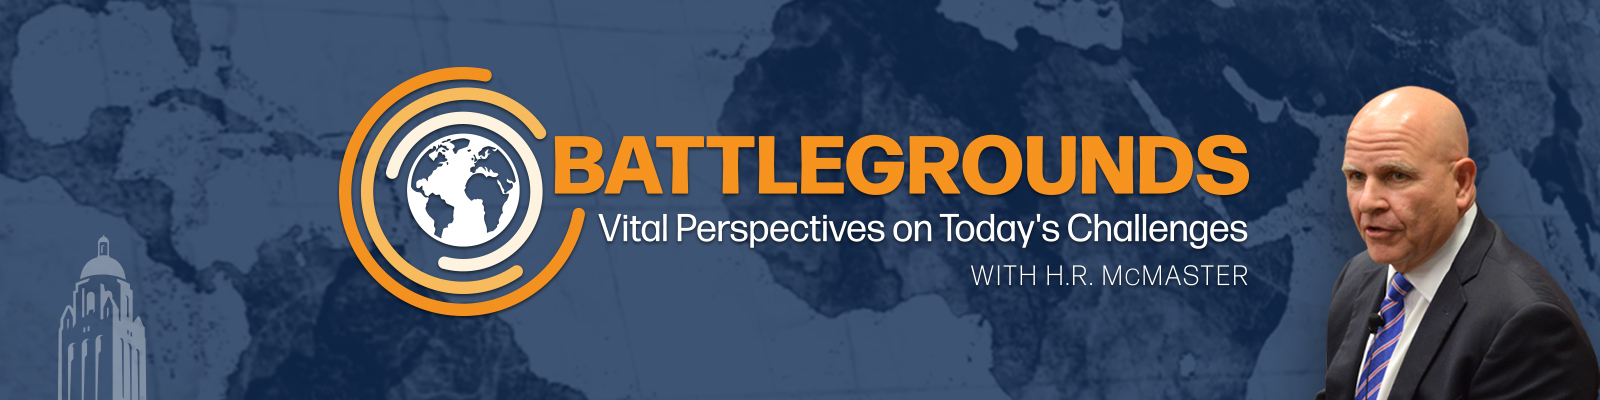 Battlegrounds w/ H.R. McMaster: International Perspectives